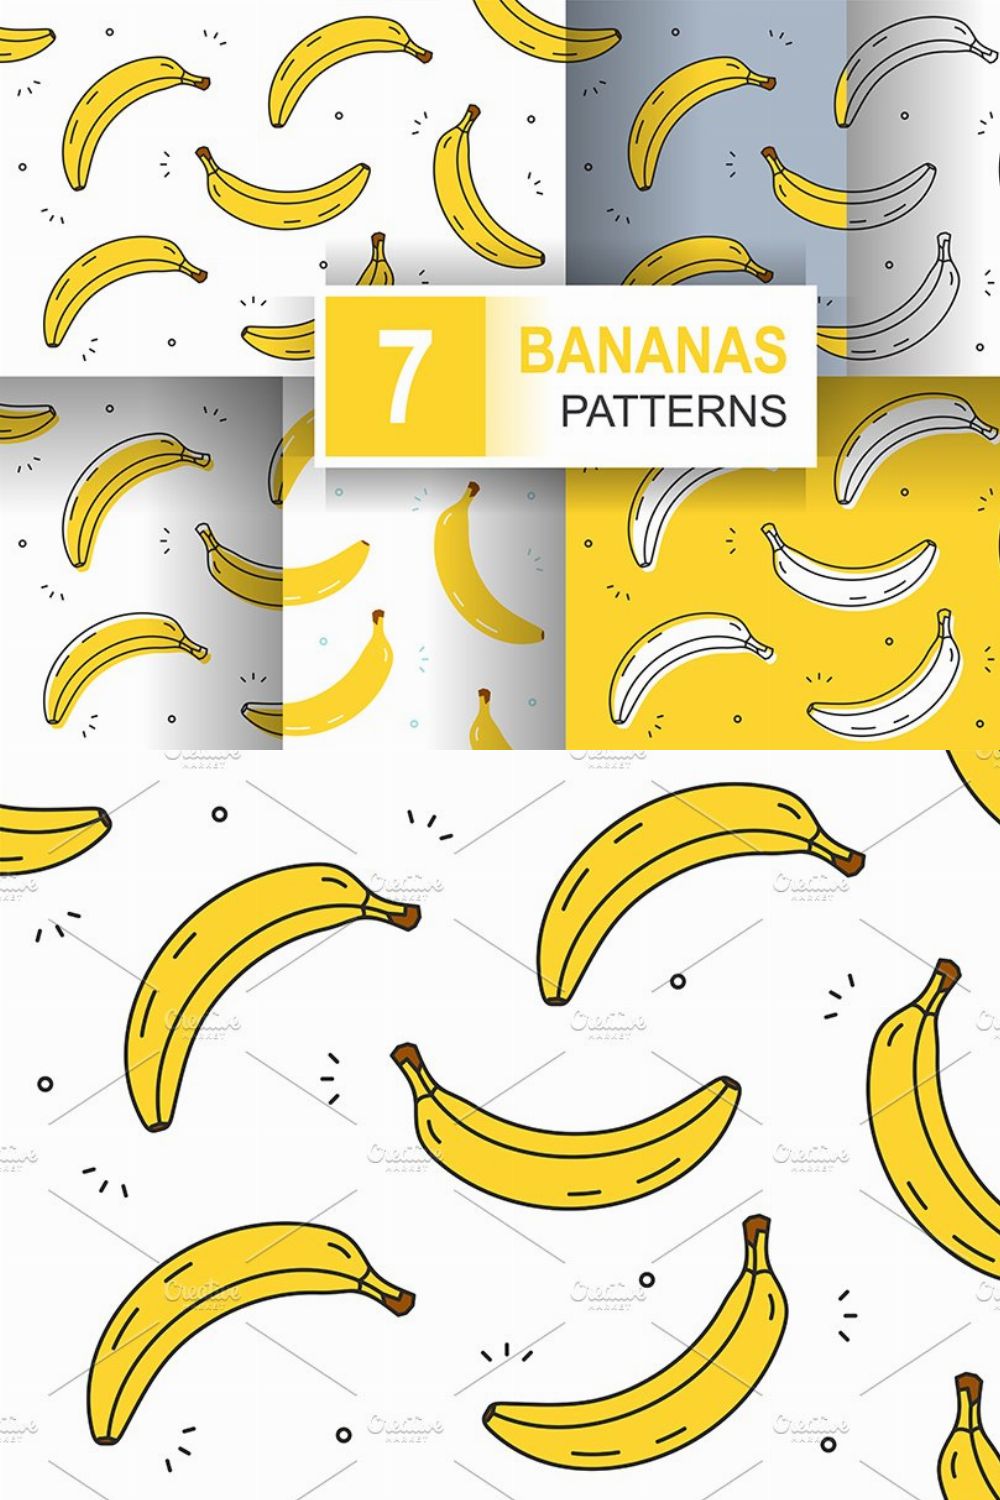 Bananas patterns pinterest preview image.